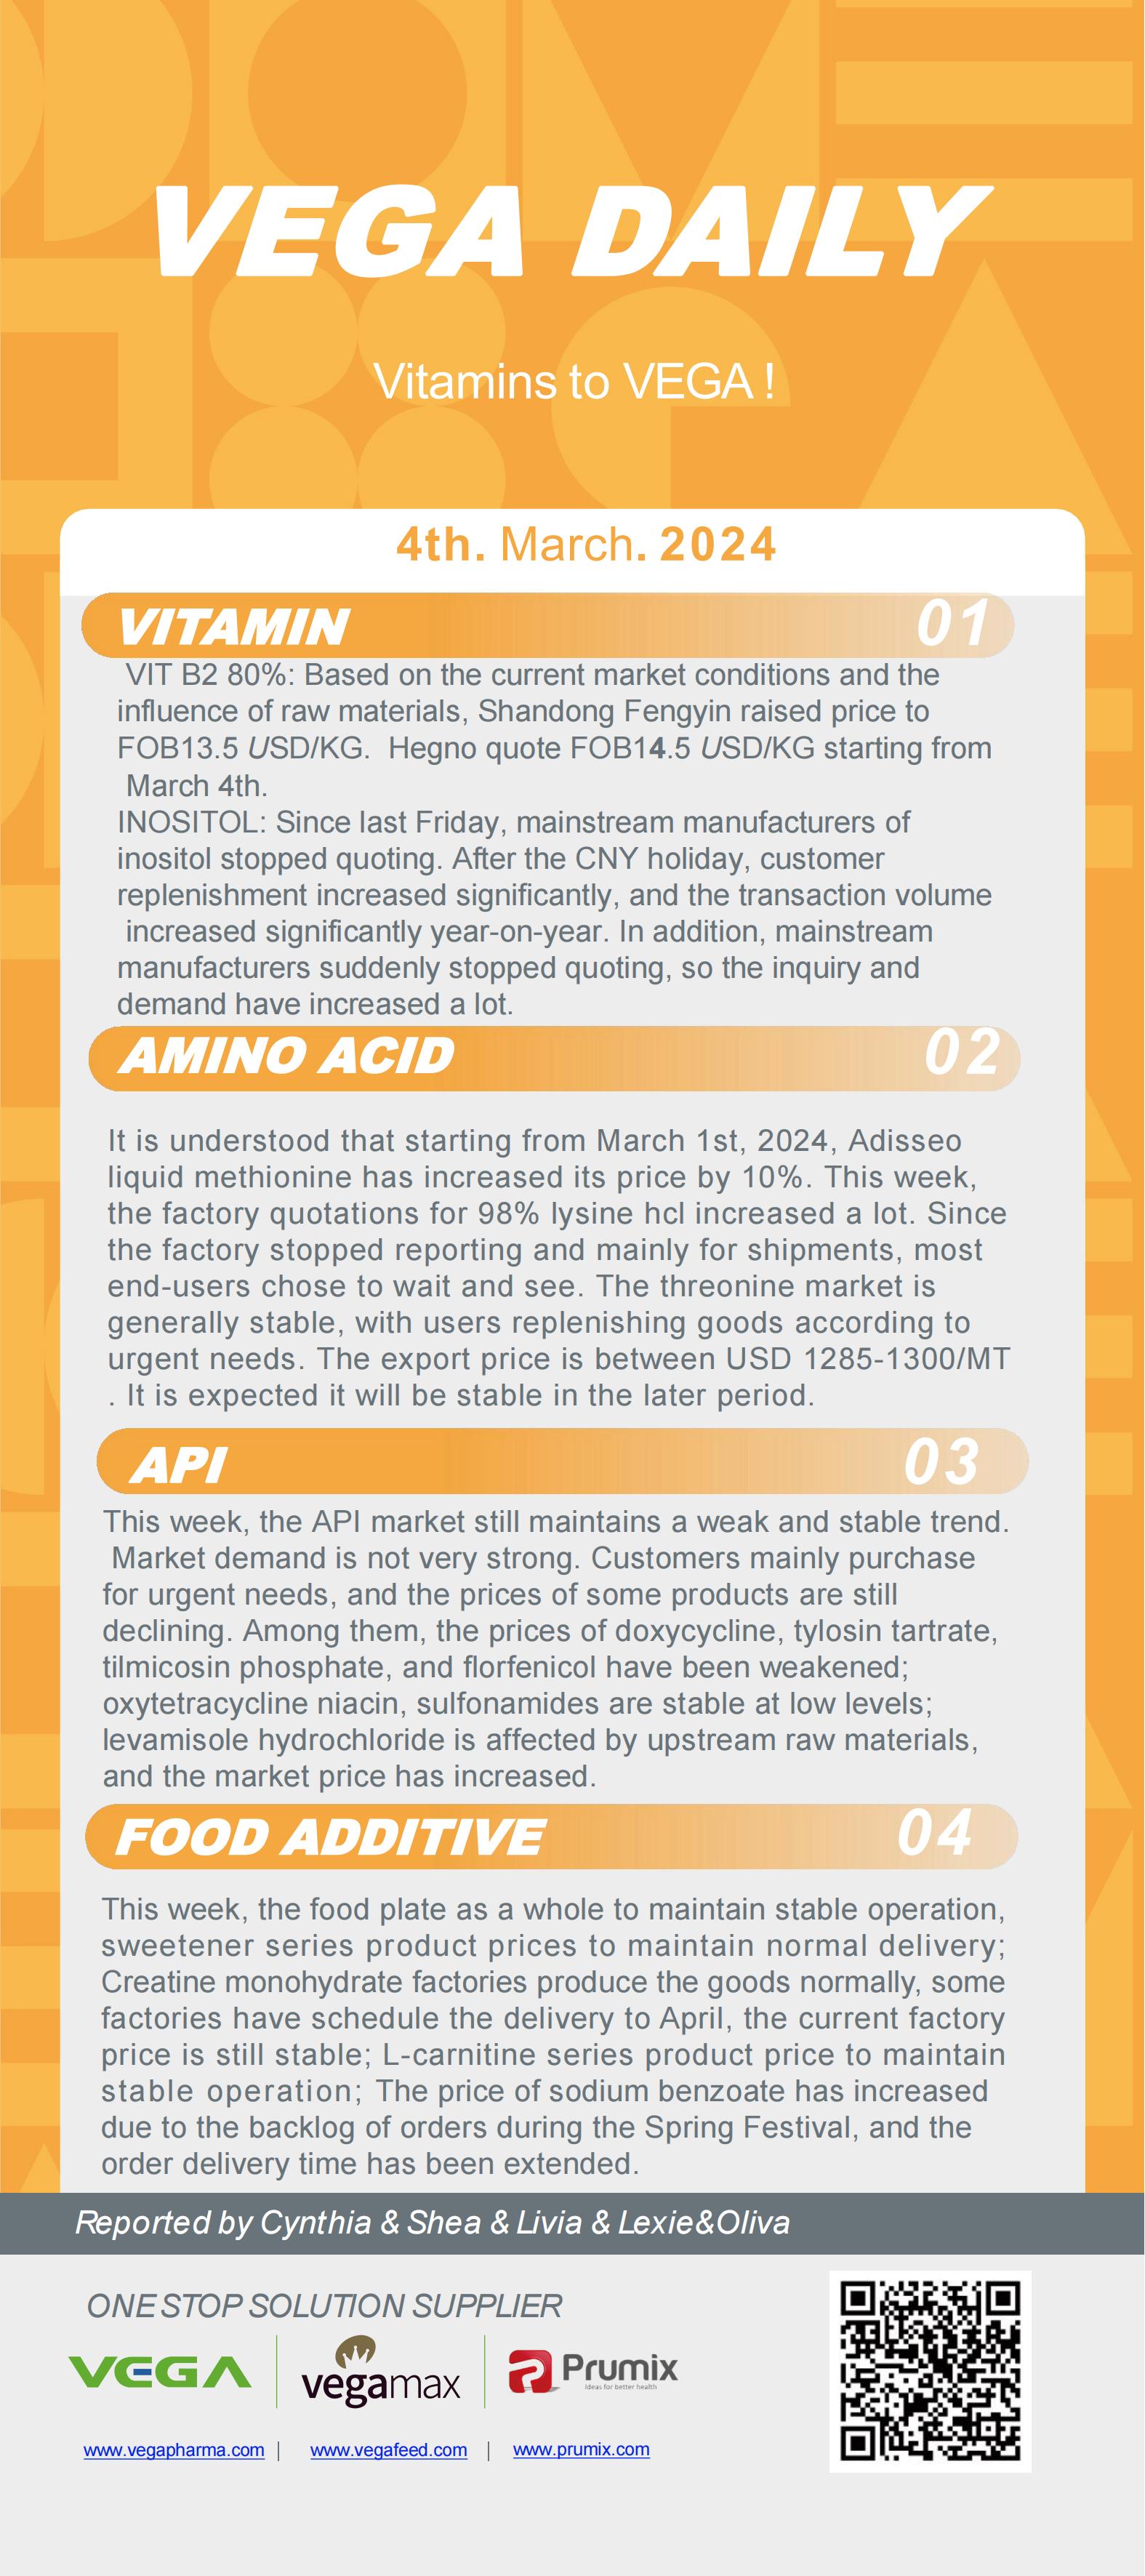 Vega Daily Dated on Mar 4th 2024 Vitamin Amino Acid APl Food Additives.jpg